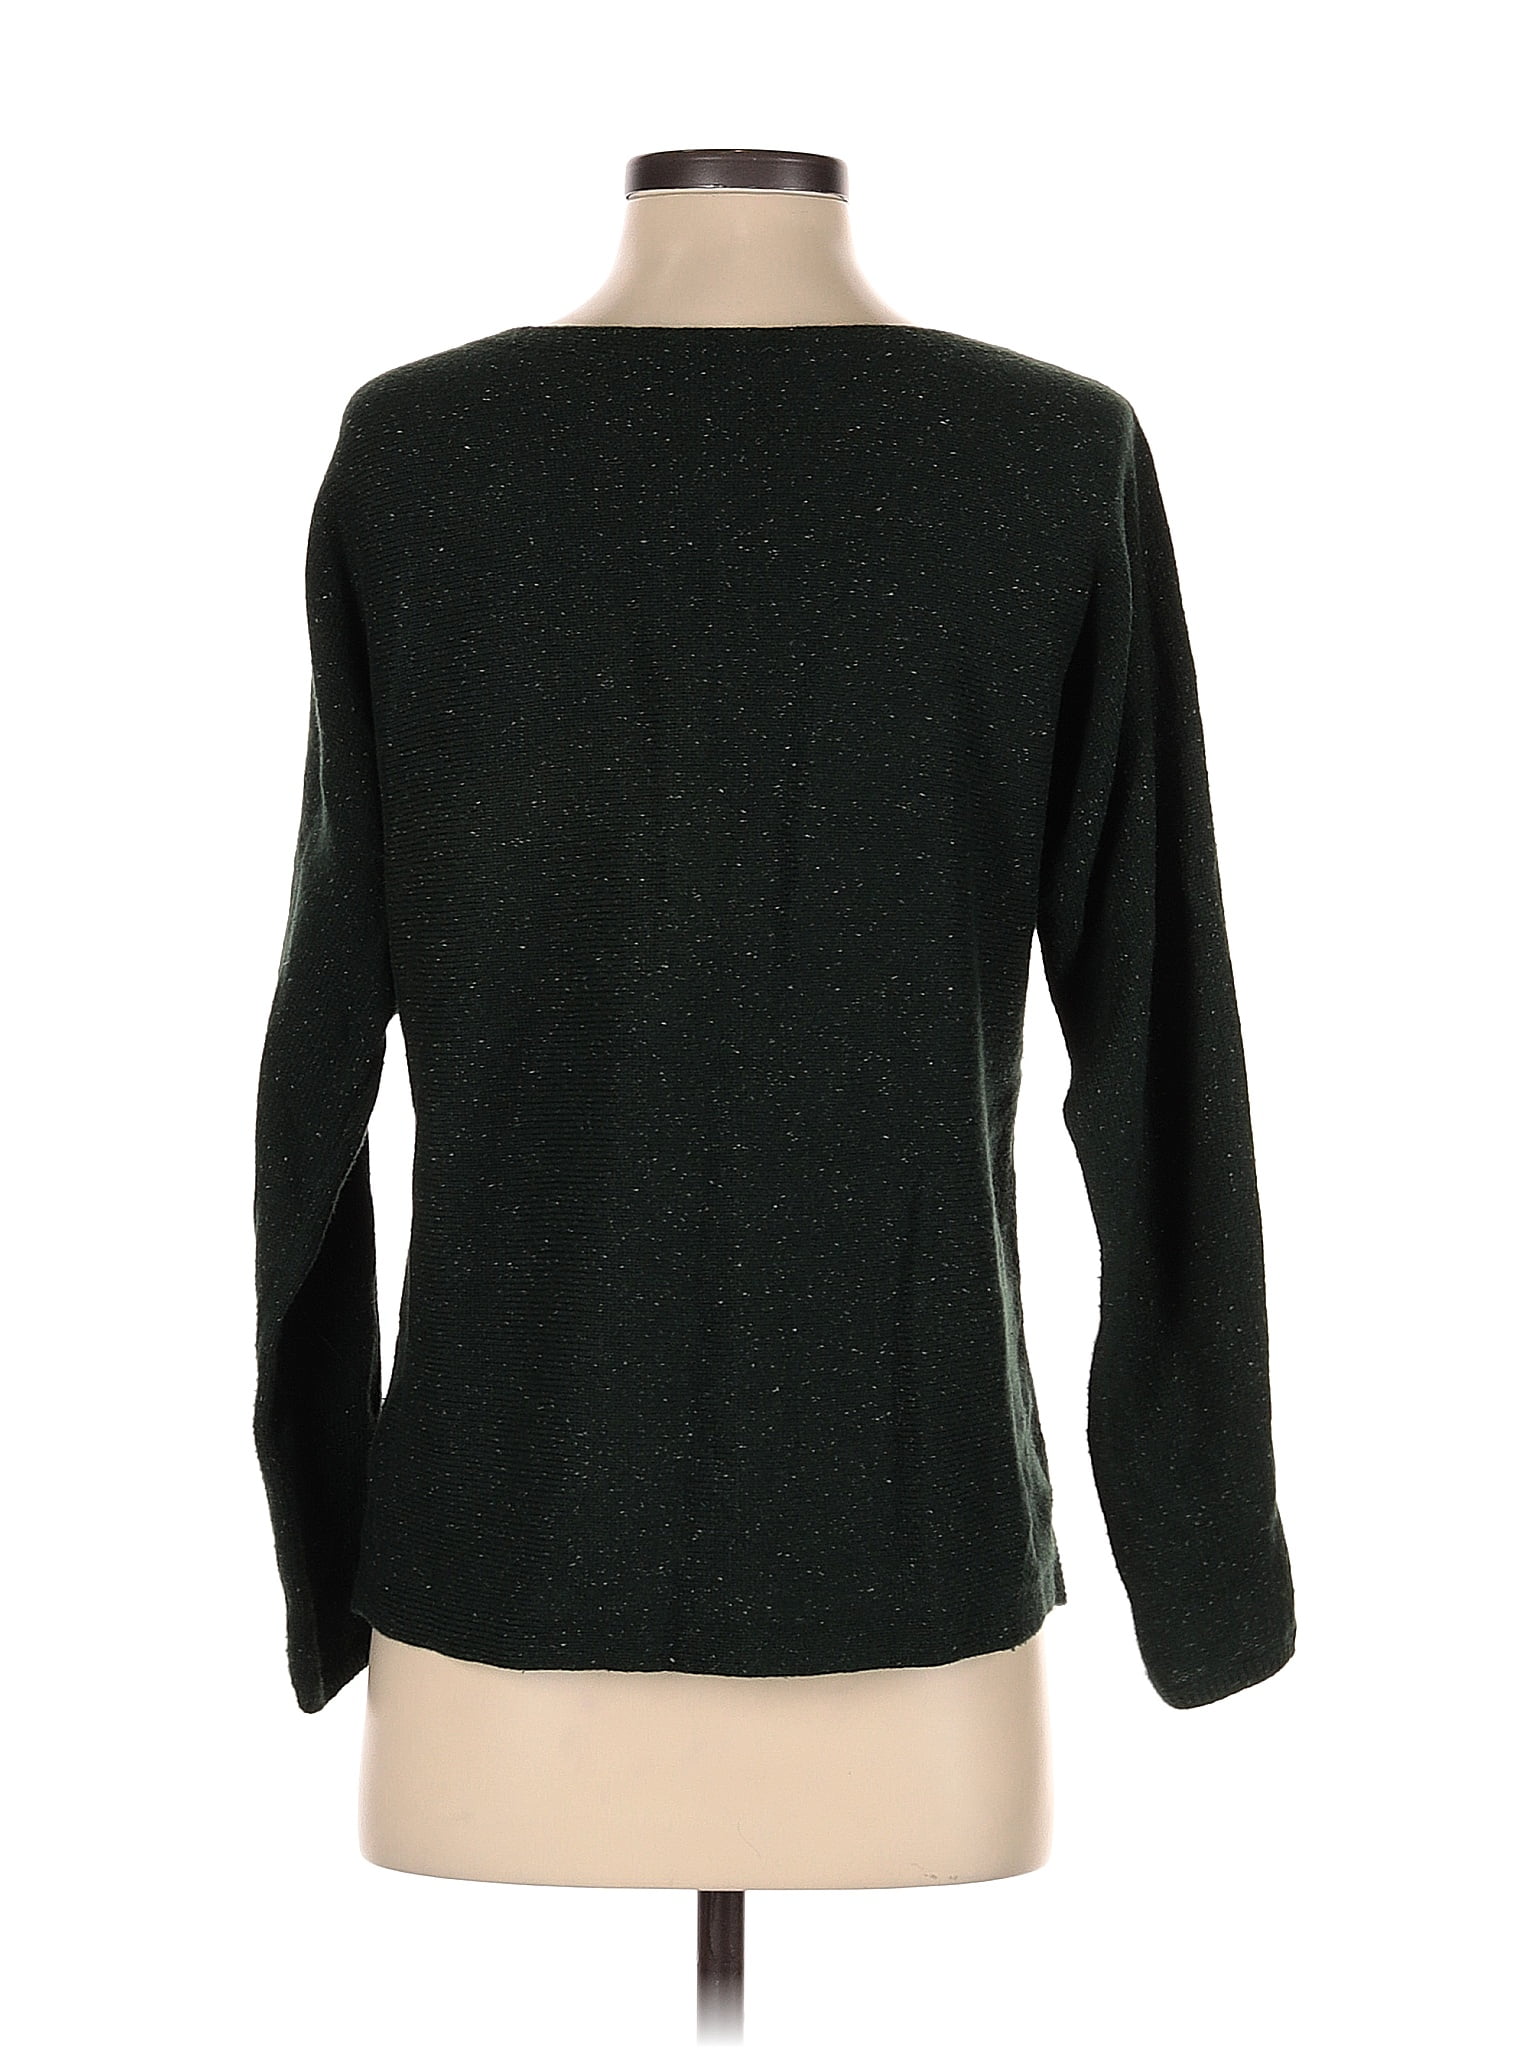 J.Jill Color Block Polka Dots Black Pullover Sweater Size 2X (Plus) - 61%  off